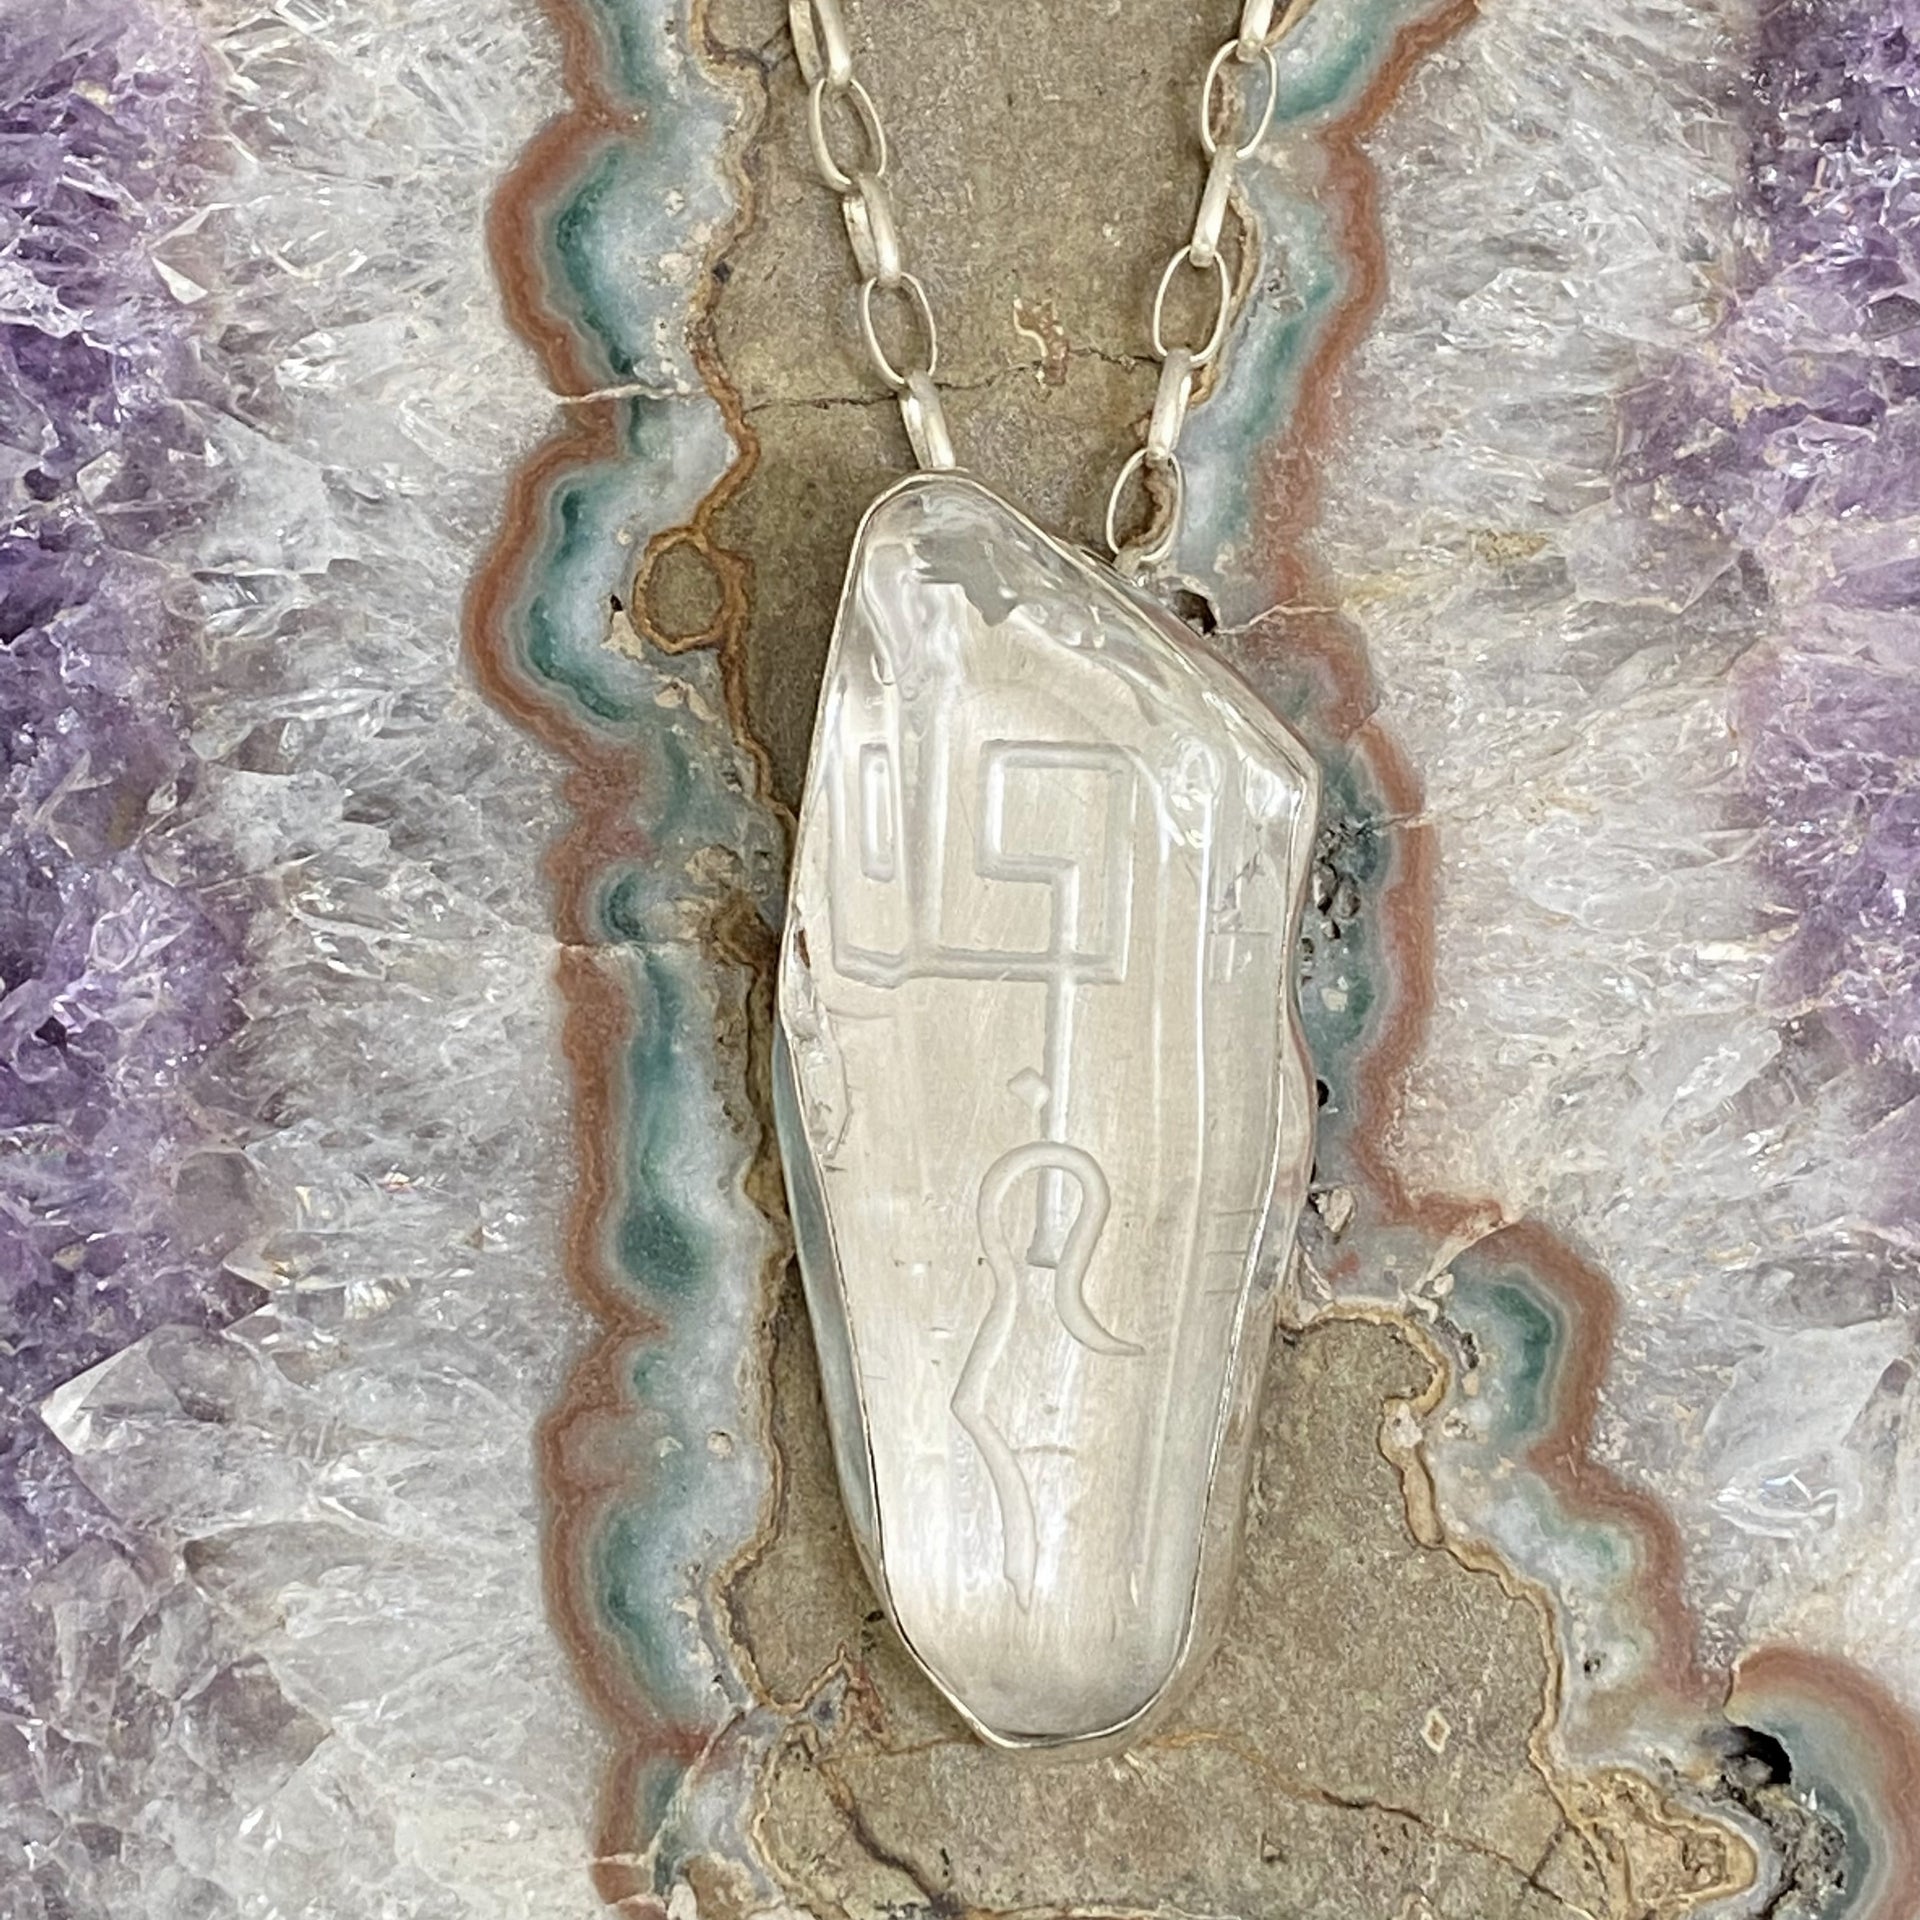 Lemurian Sterling Silver Pendant with Divine Feminine & Sacred Masculine Symbols